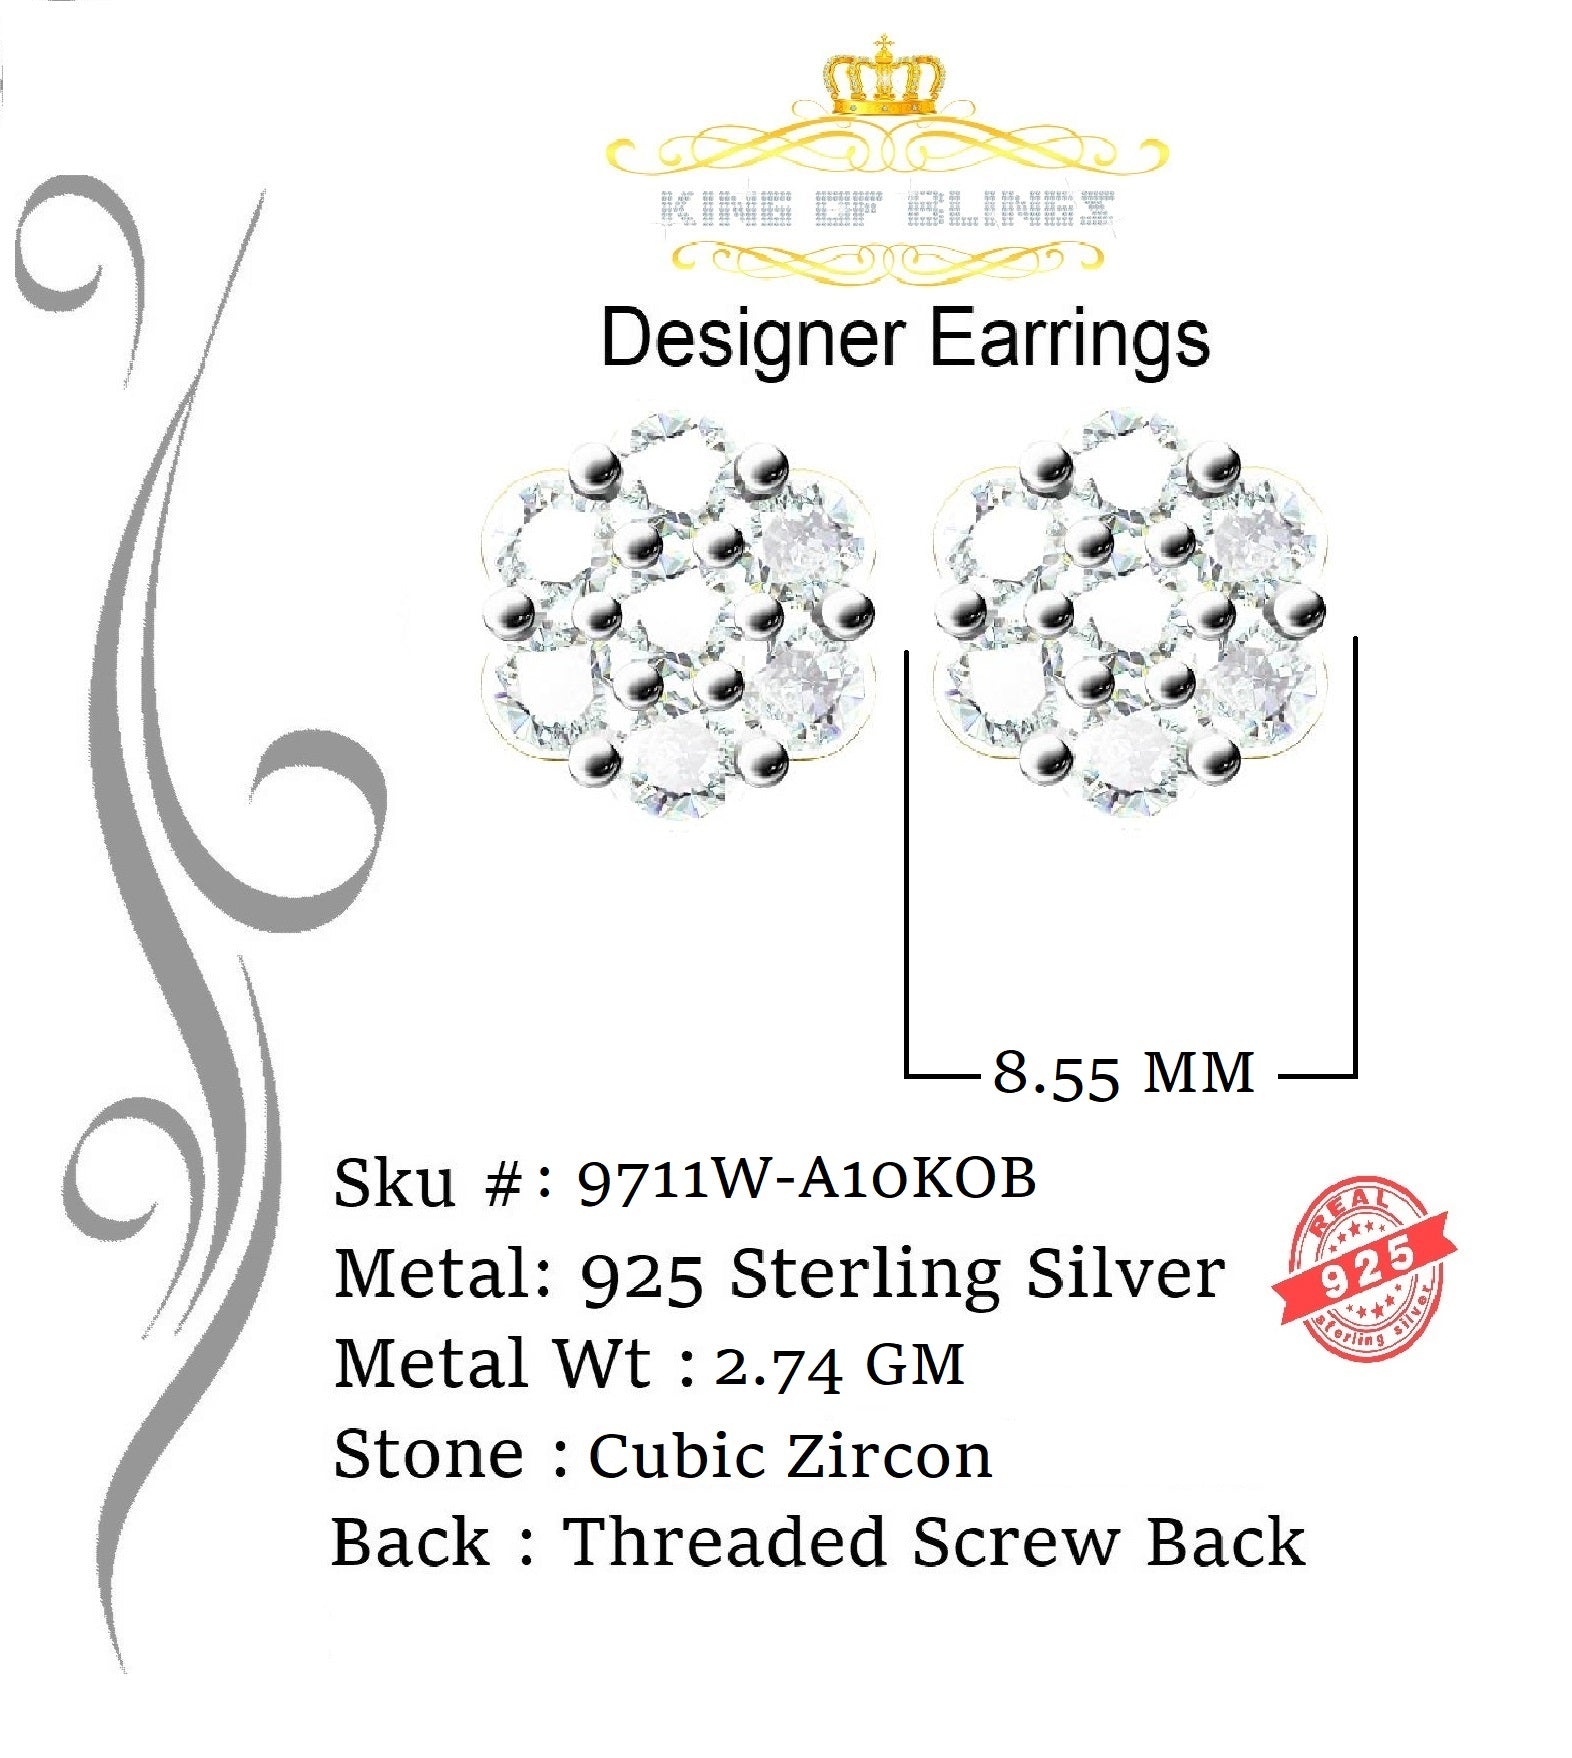 King of Blings- Cubic Zirconia 925 White 2.66ct Sterling Silver Women's Hip Hop Floral Earrings KING OF BLINGS